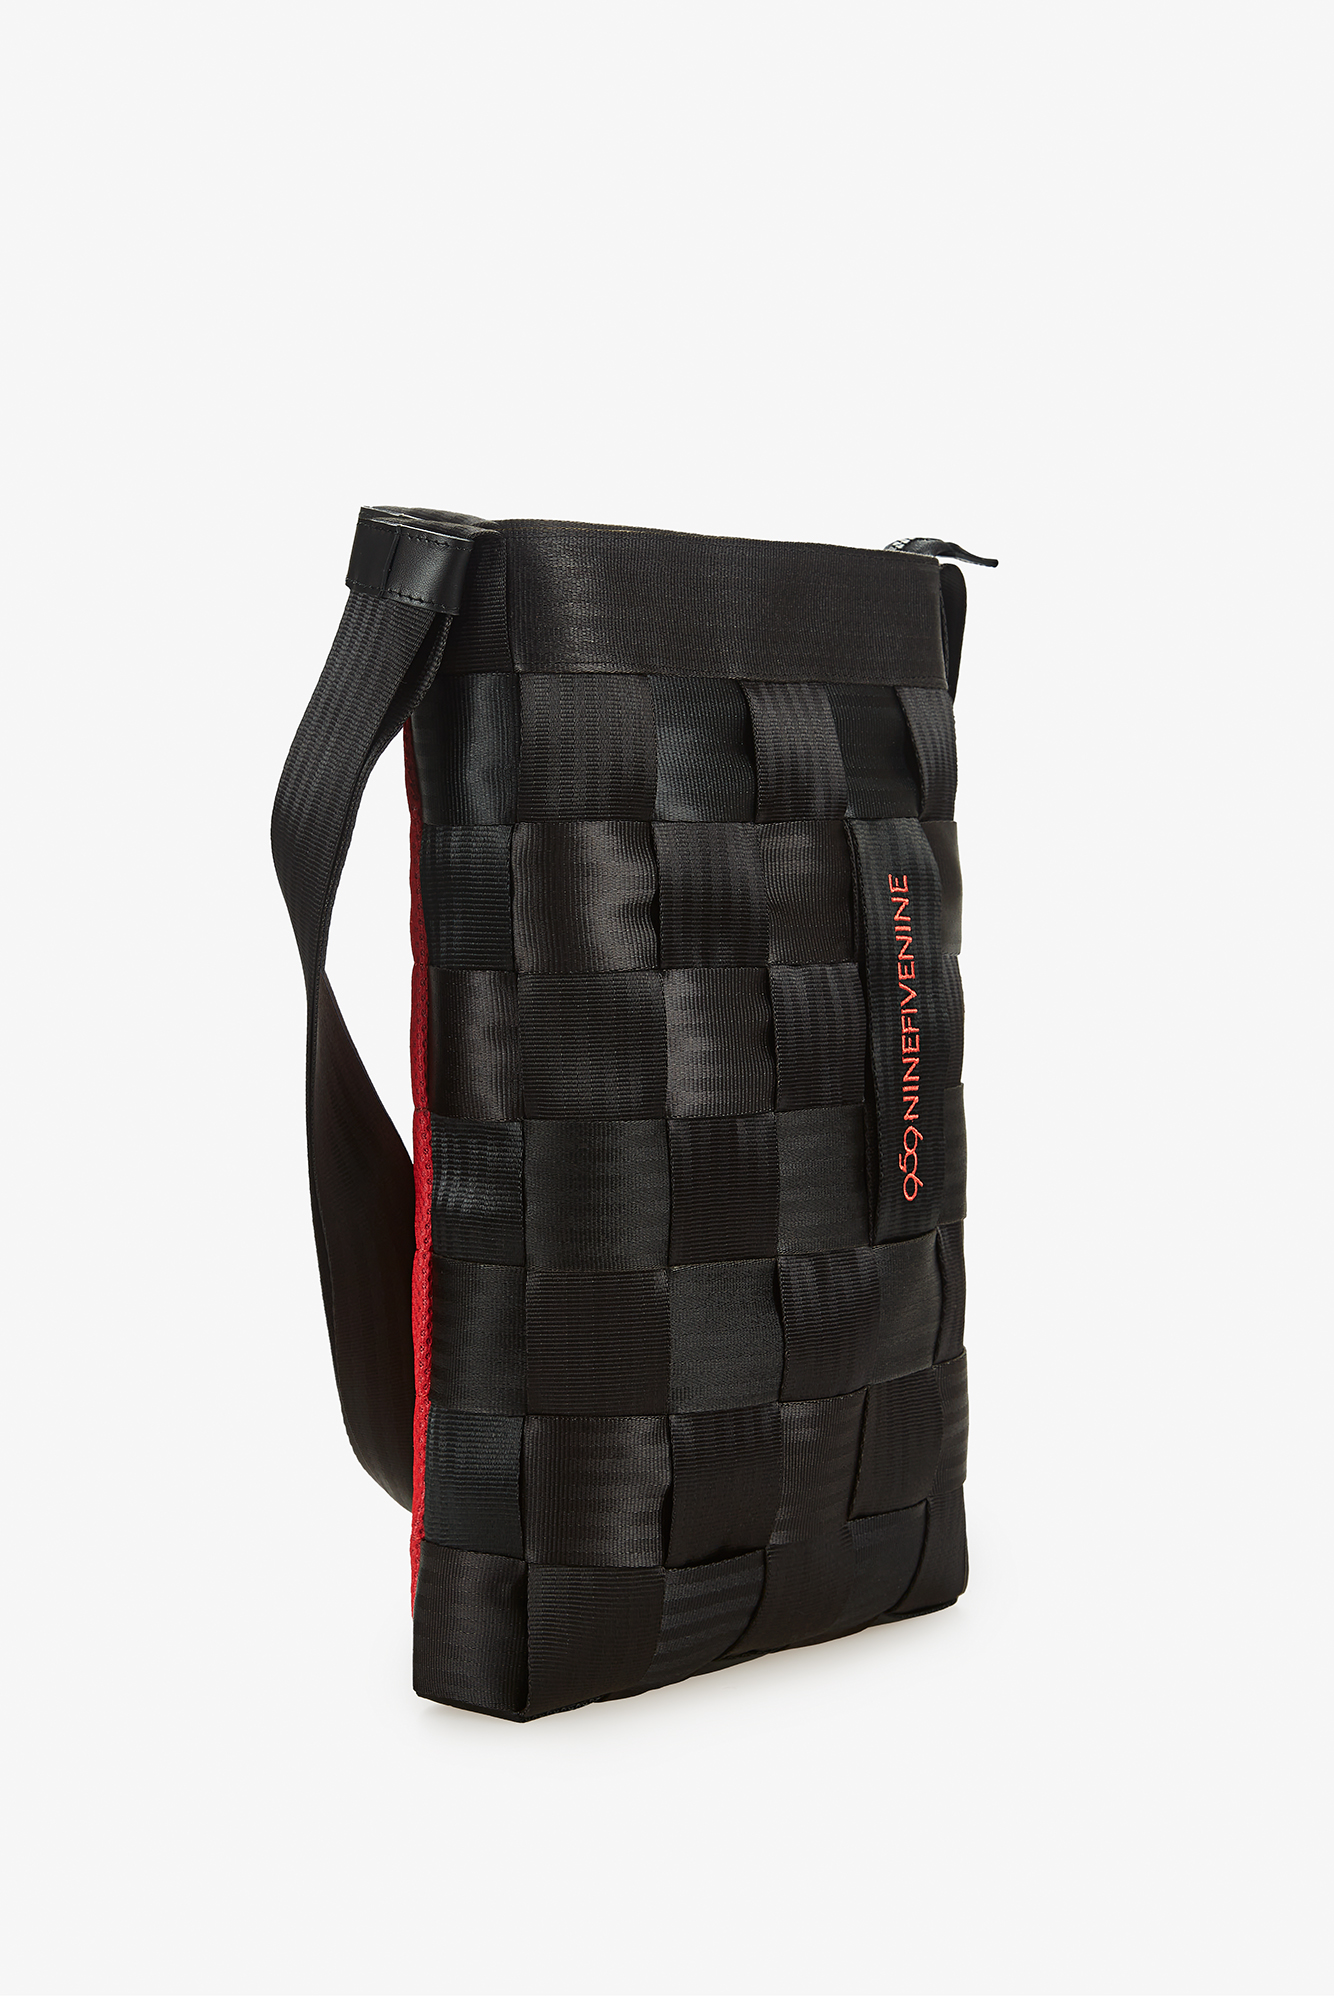 Harvey's Seatbelt Bag Purse Black - $72 - From Hannah